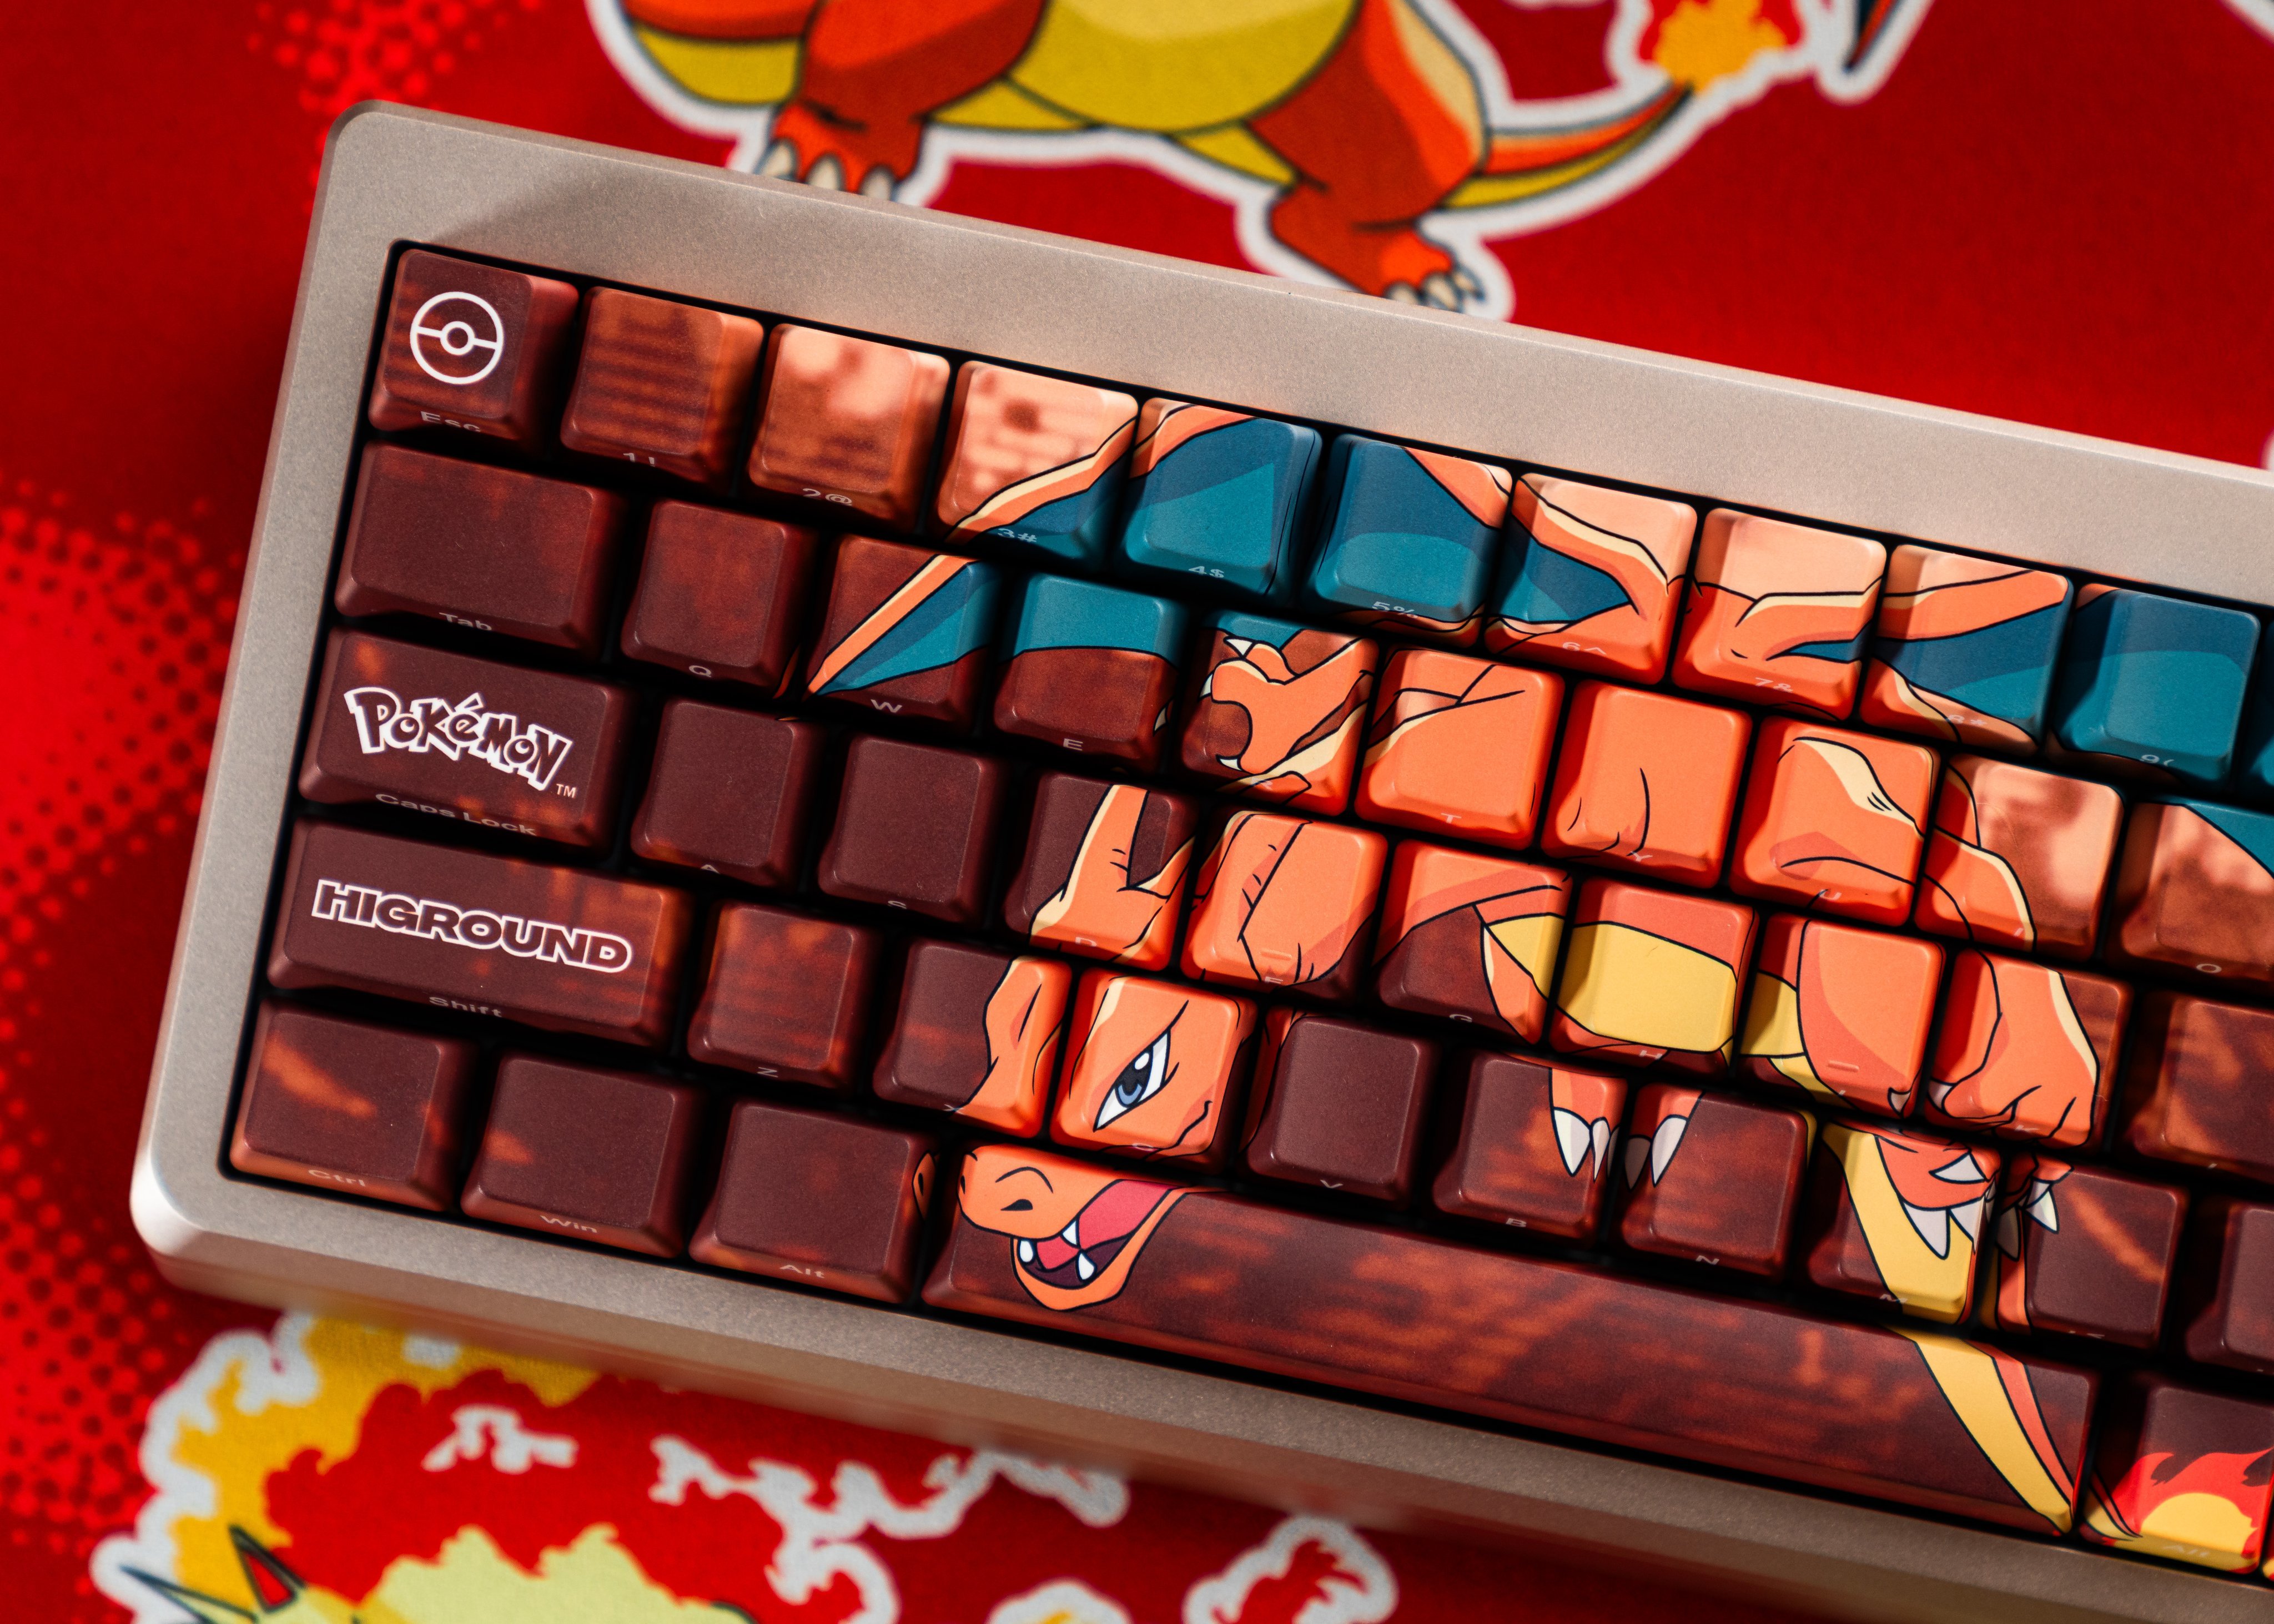 Higround unveils keyboards with Pokémon theme